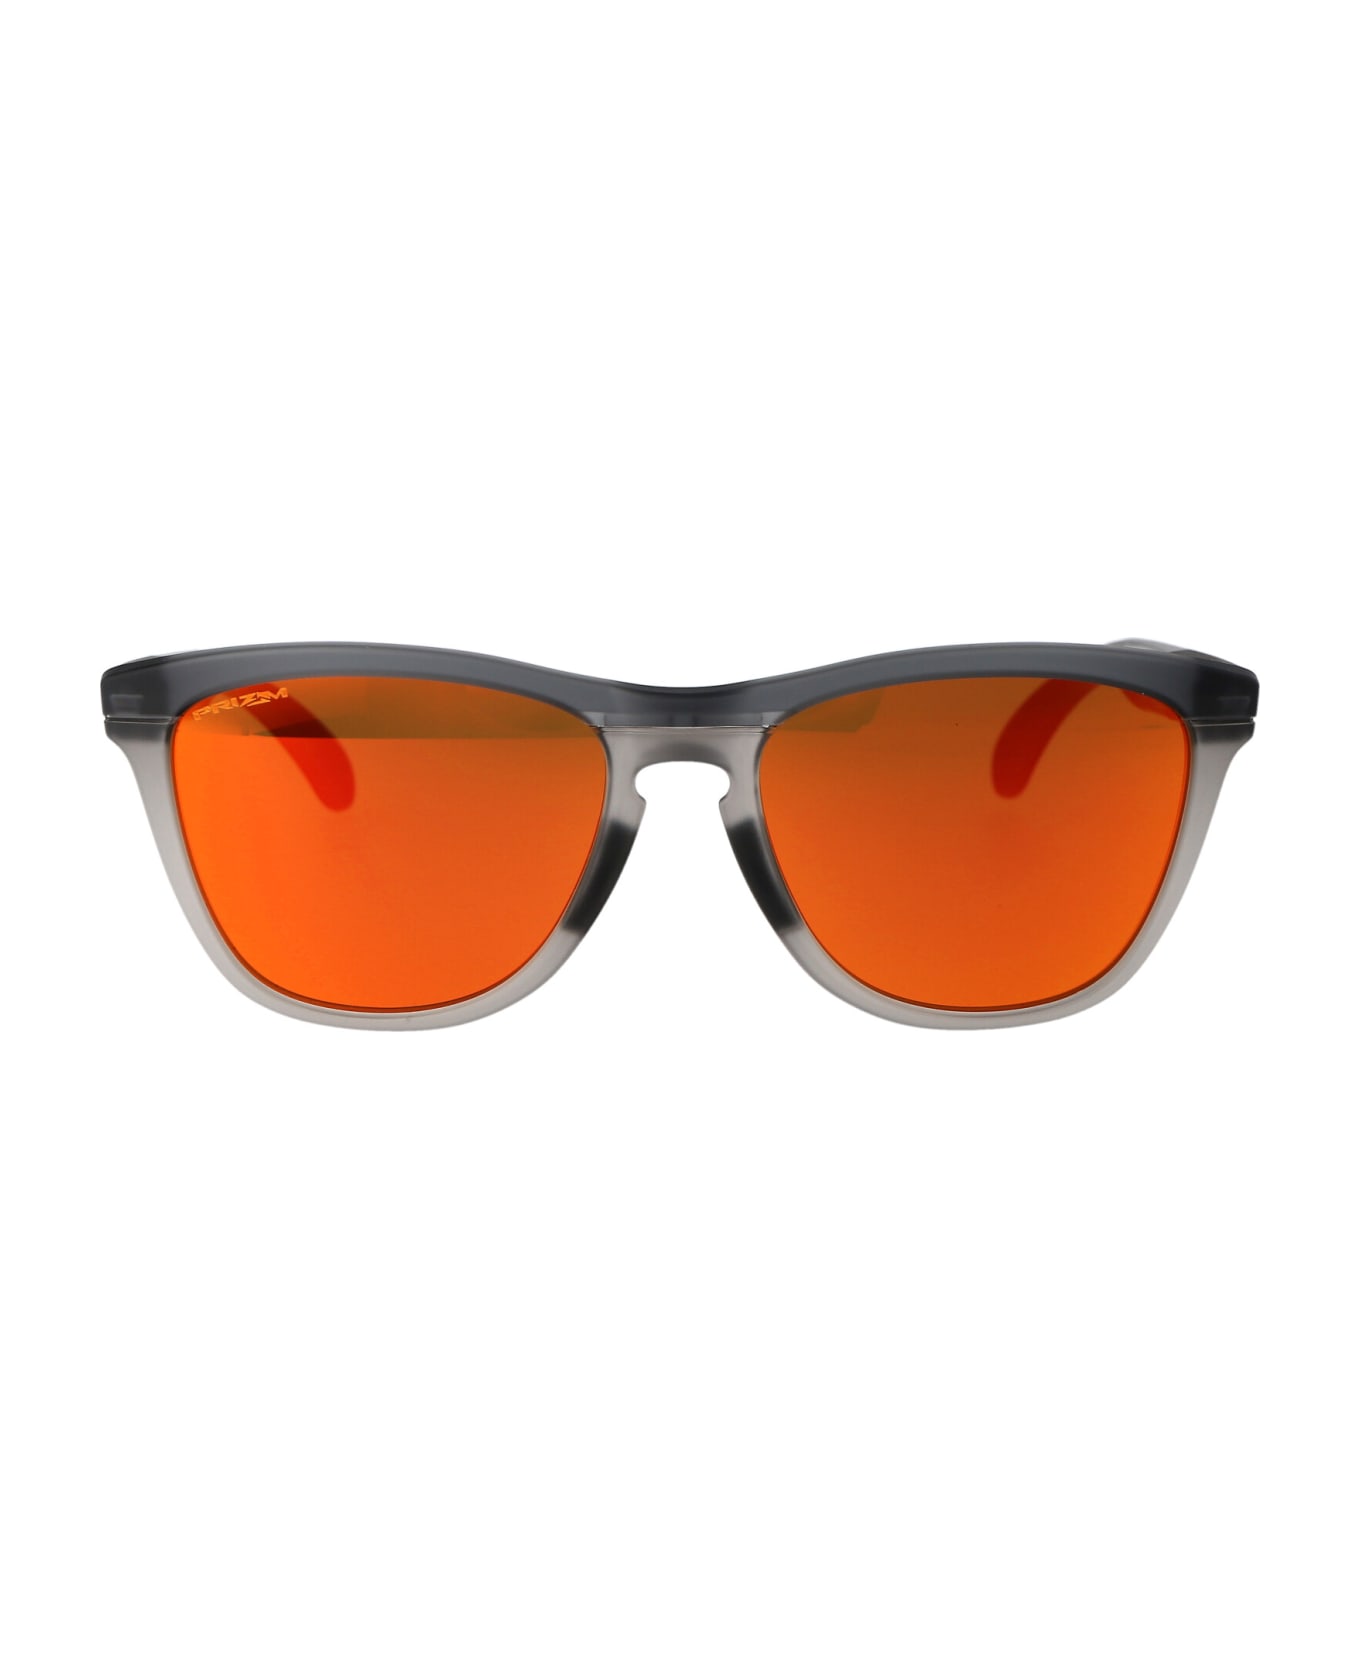 Oakley Frogskins Range Sunglasses - Red サングラス